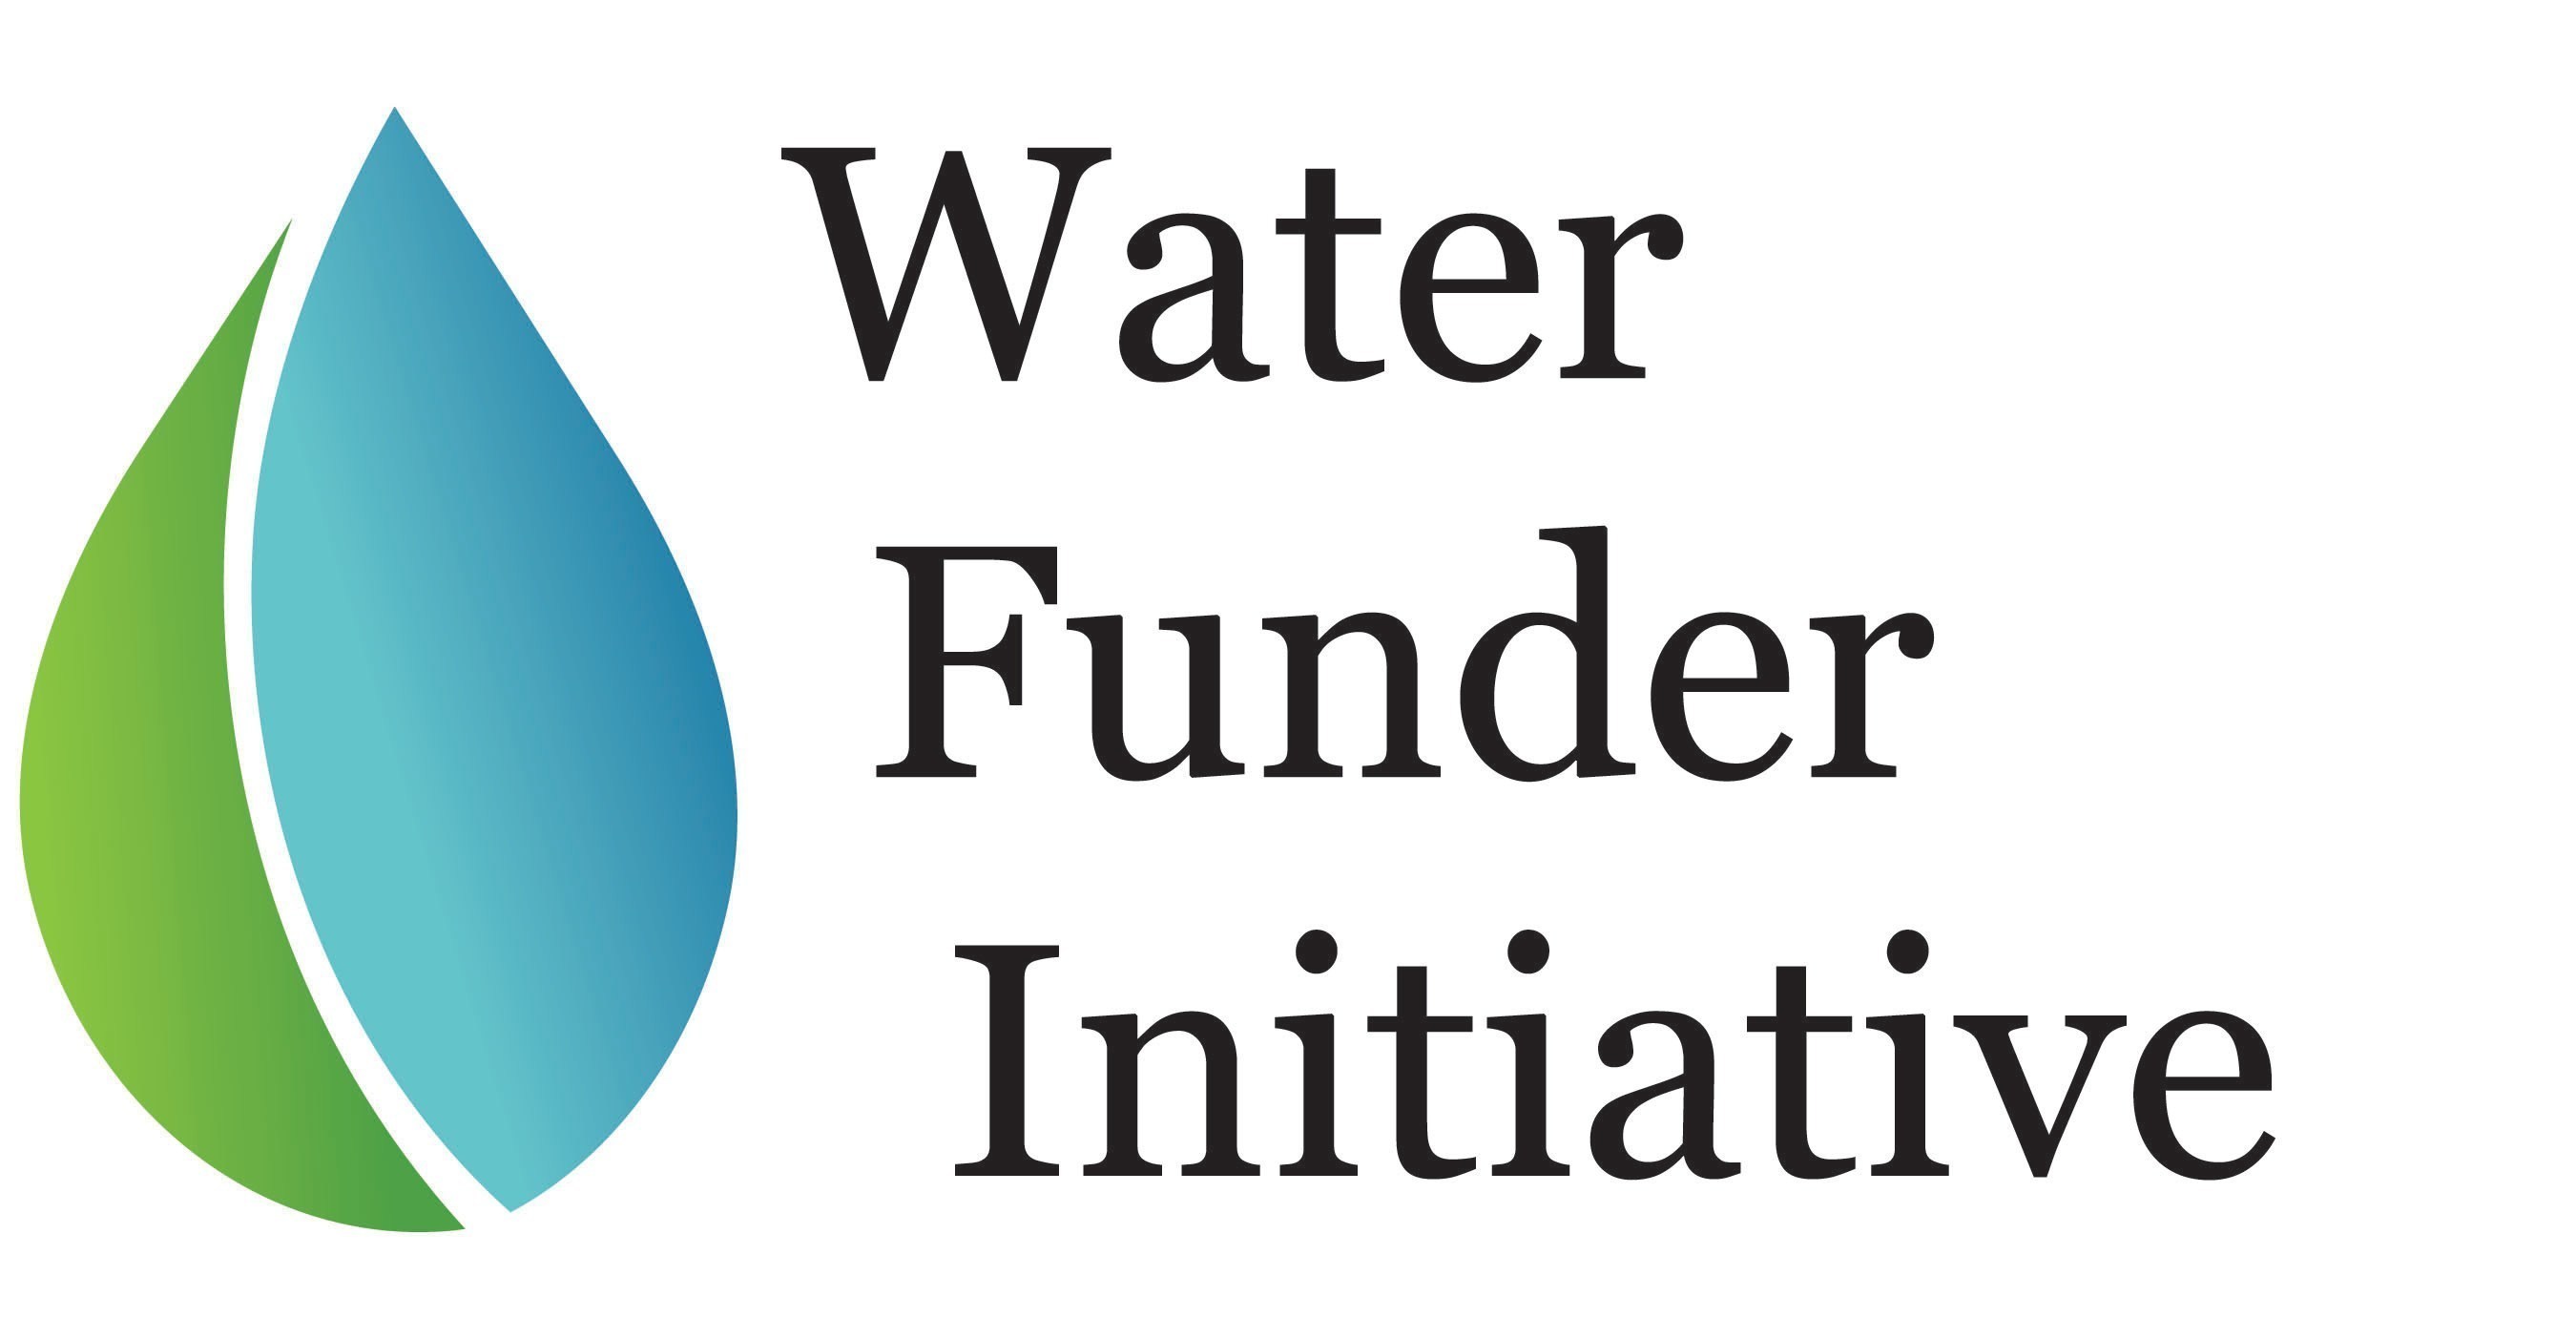 Water Funder Initiative